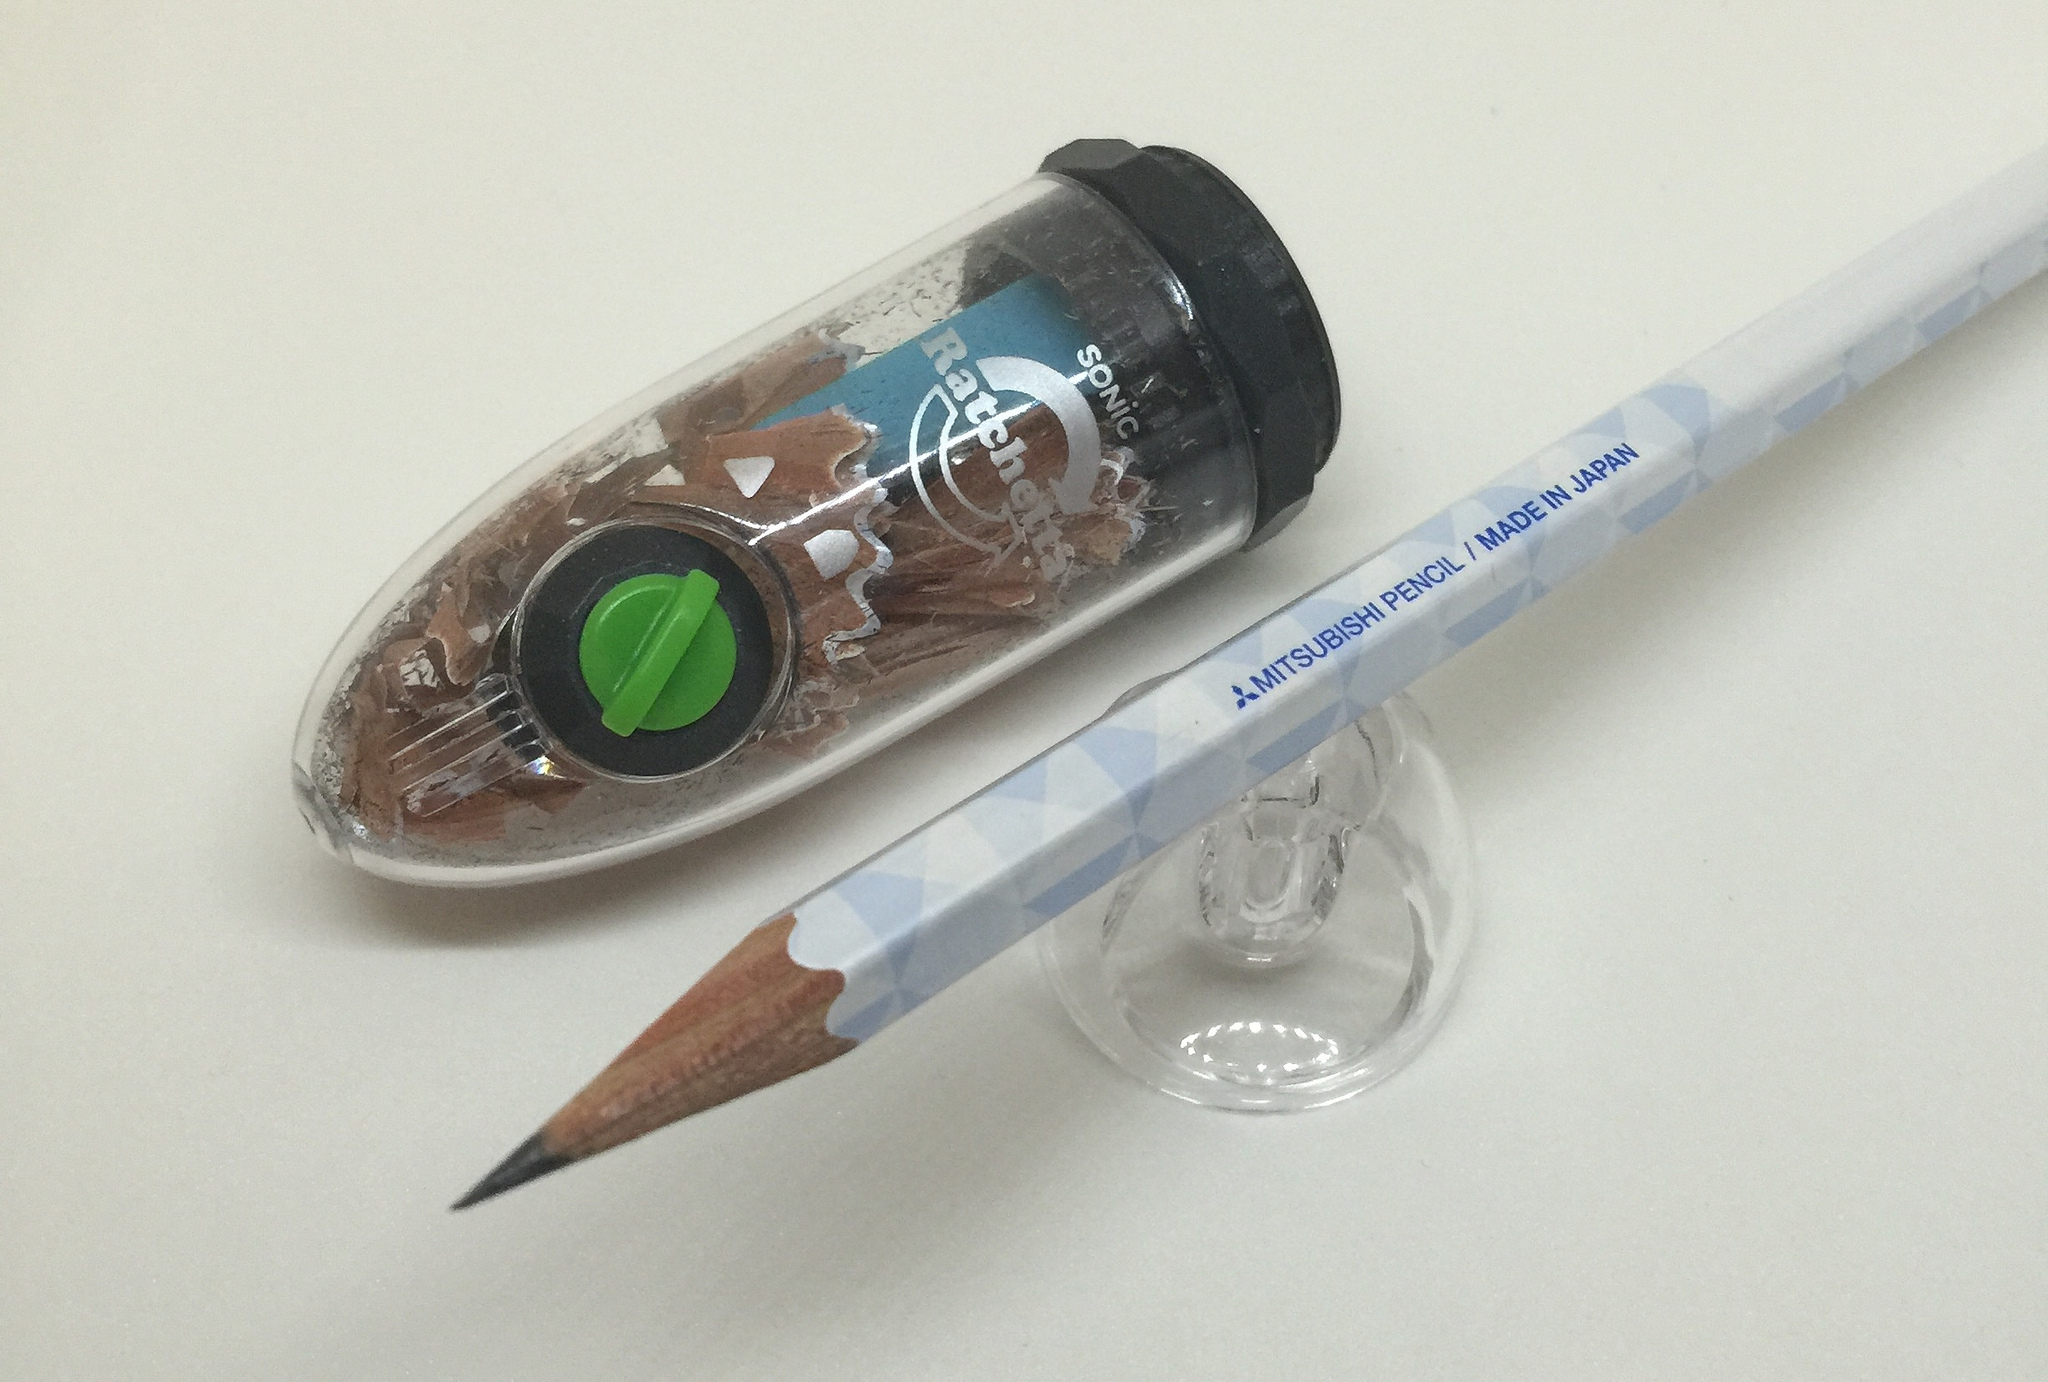 Sonic Rachetta capsule handy pencil sharpener Red SK-878-R